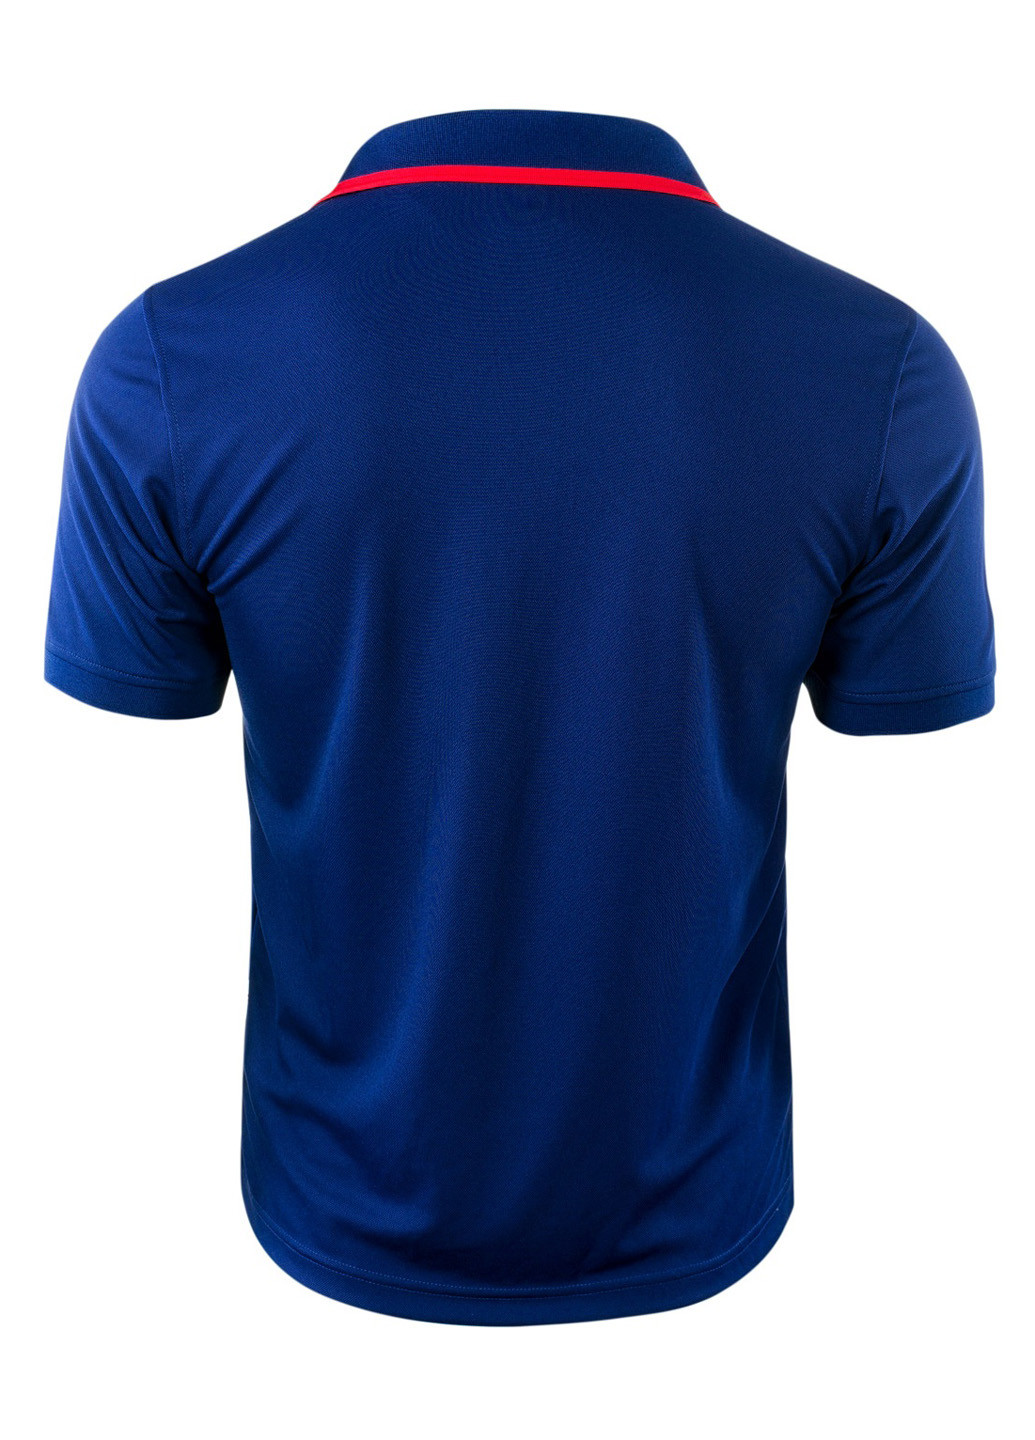 Темно-синяя футболка-поло для мужчин Hi-Tec однотонная